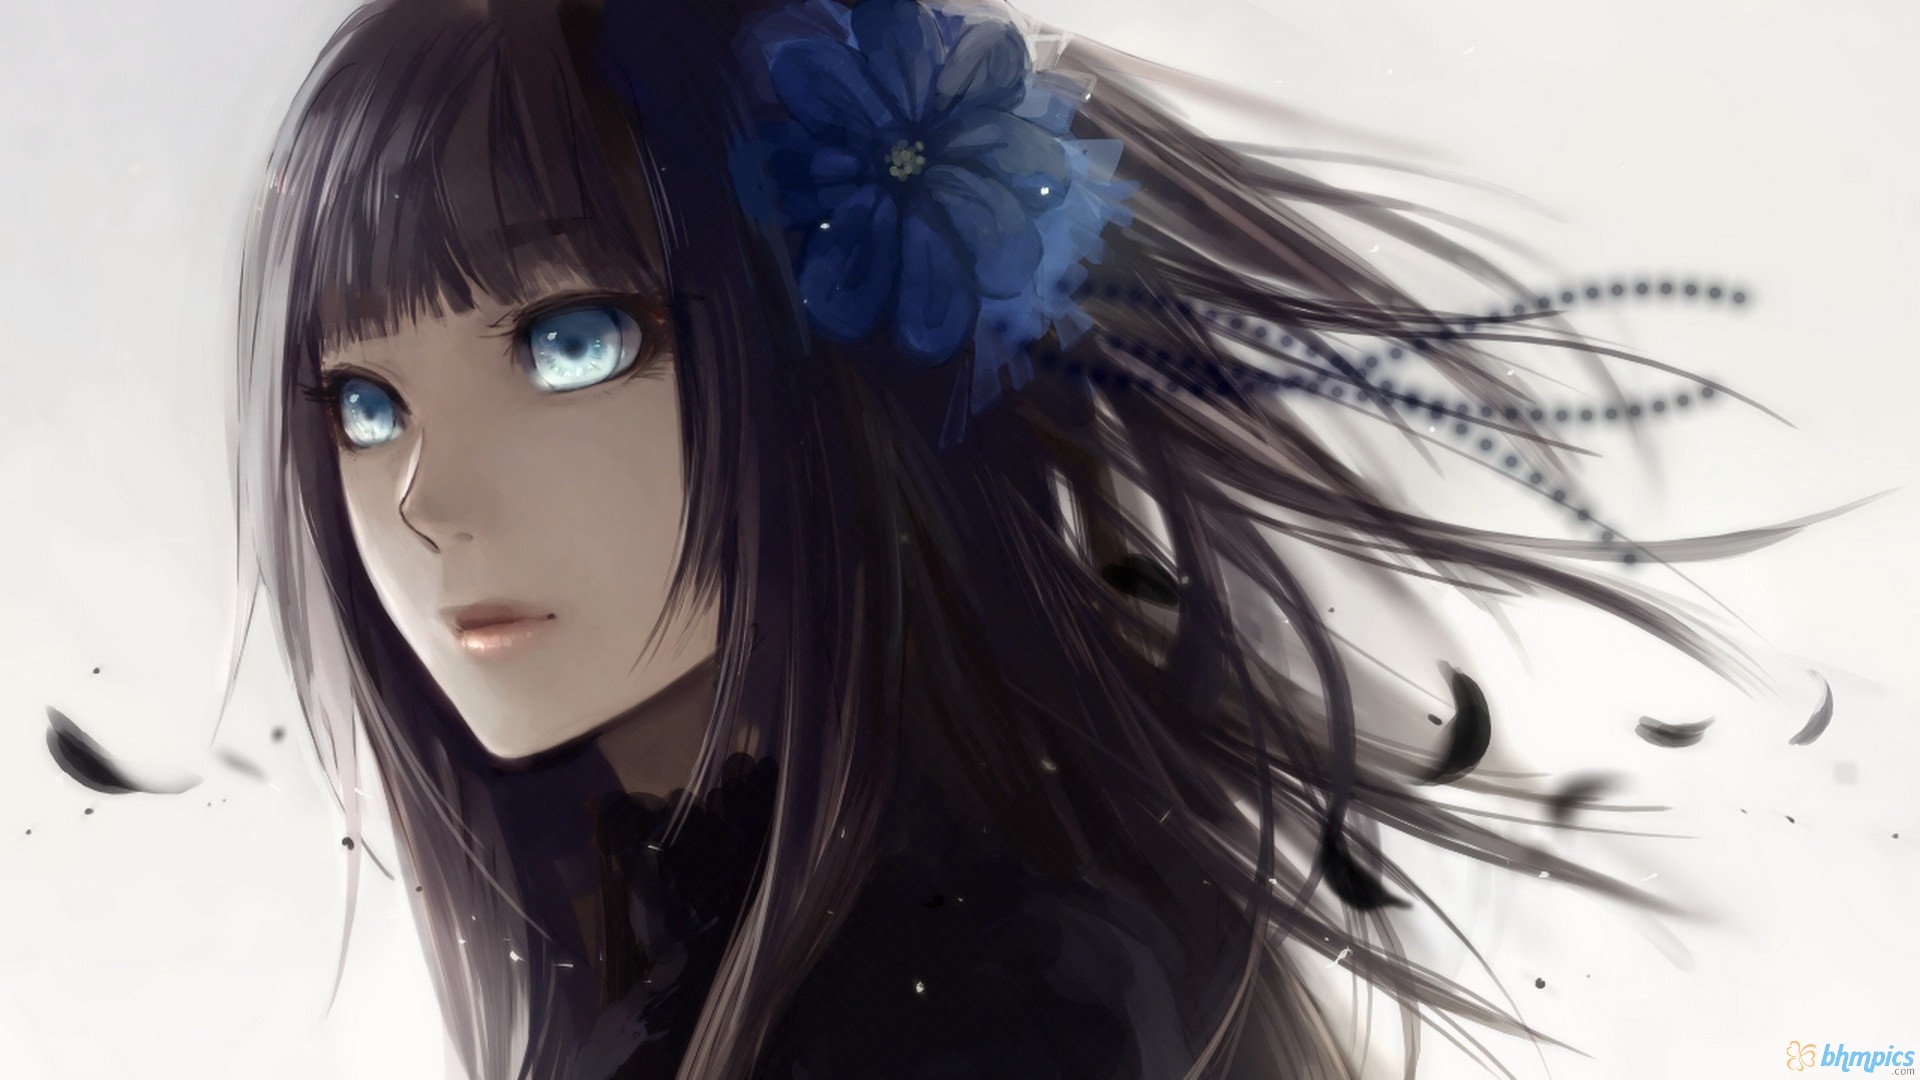 anime_girl_with_black_hair_and_blue_eyes-1920x1080.jpg